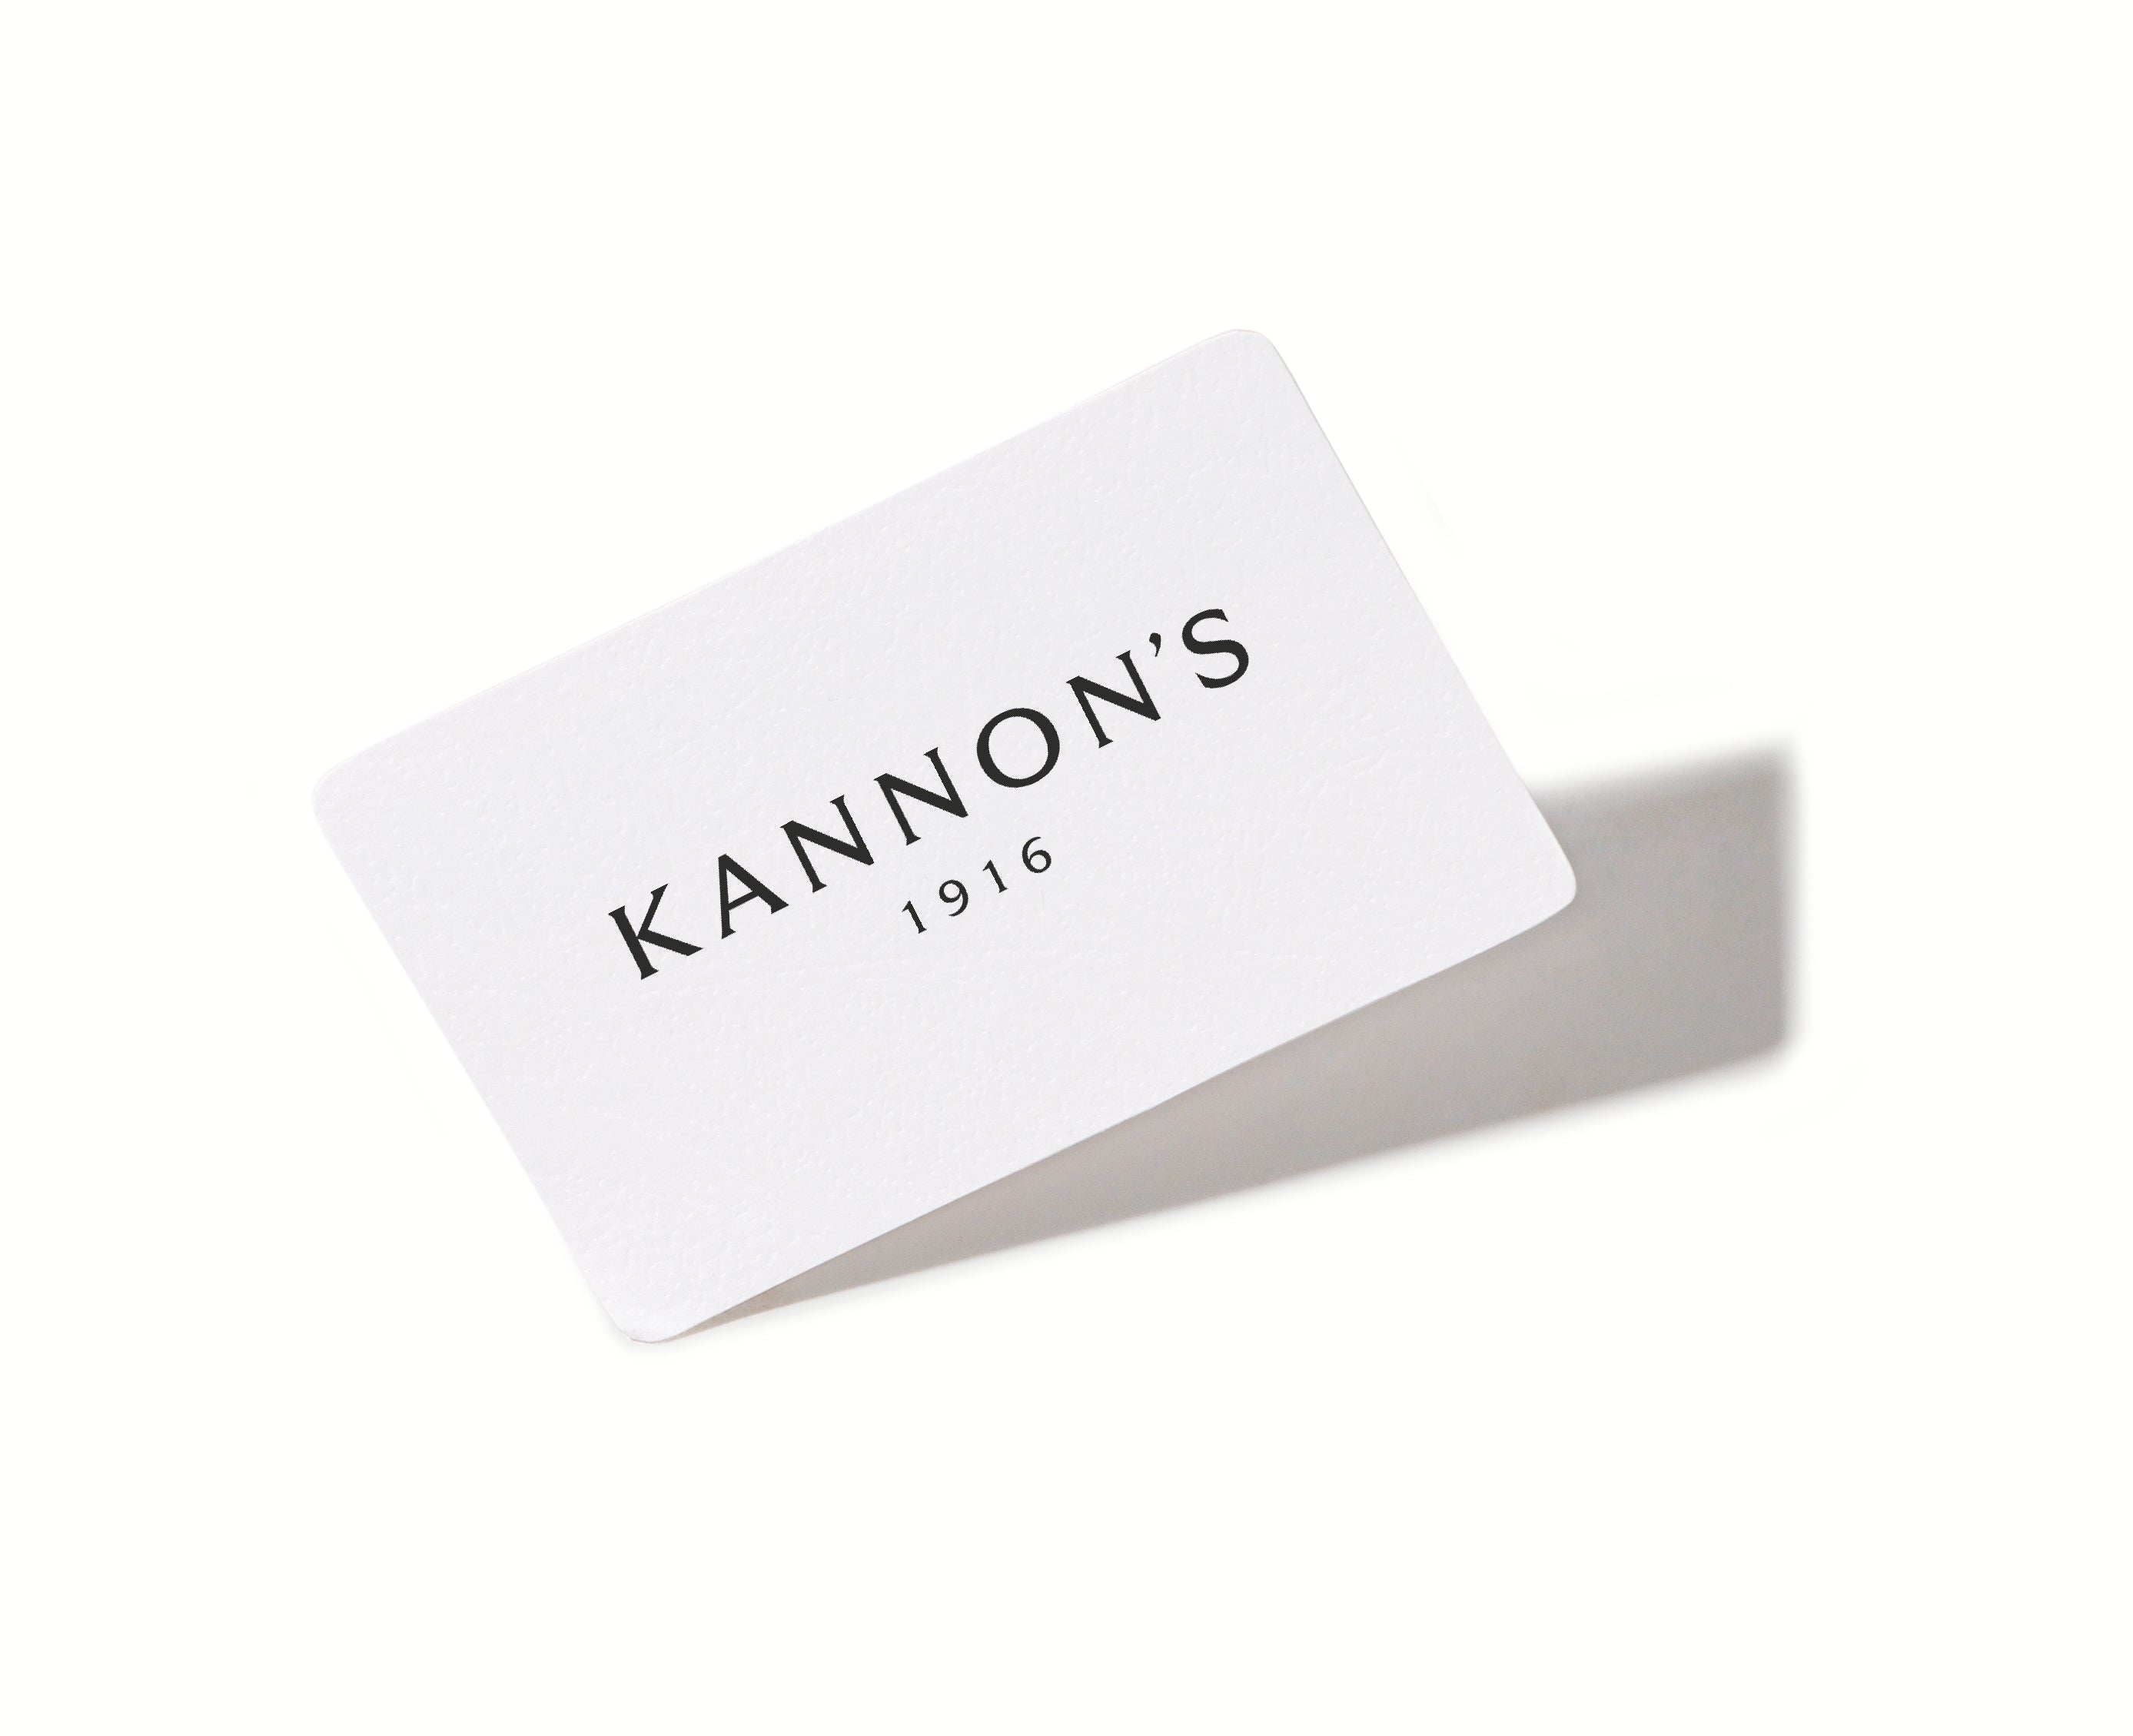 KANNON'S GIFT CARD